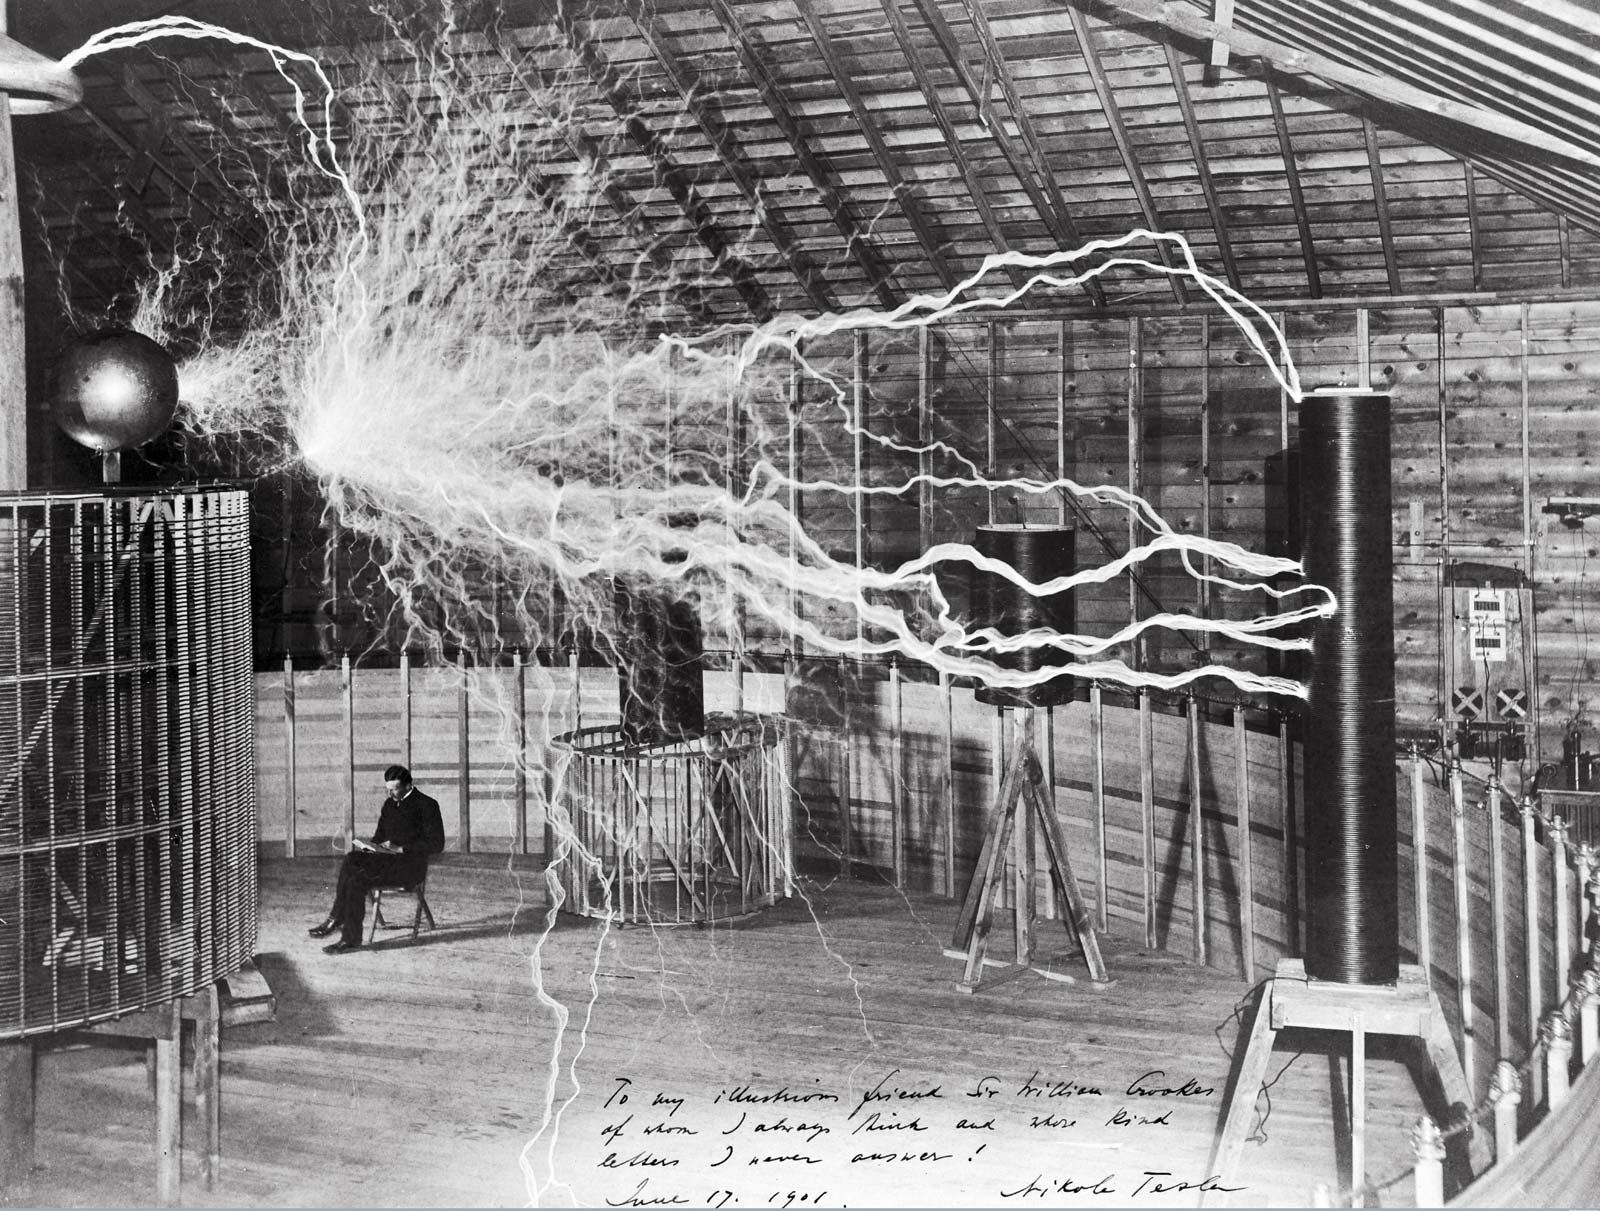 Nikola Tesla's contributions